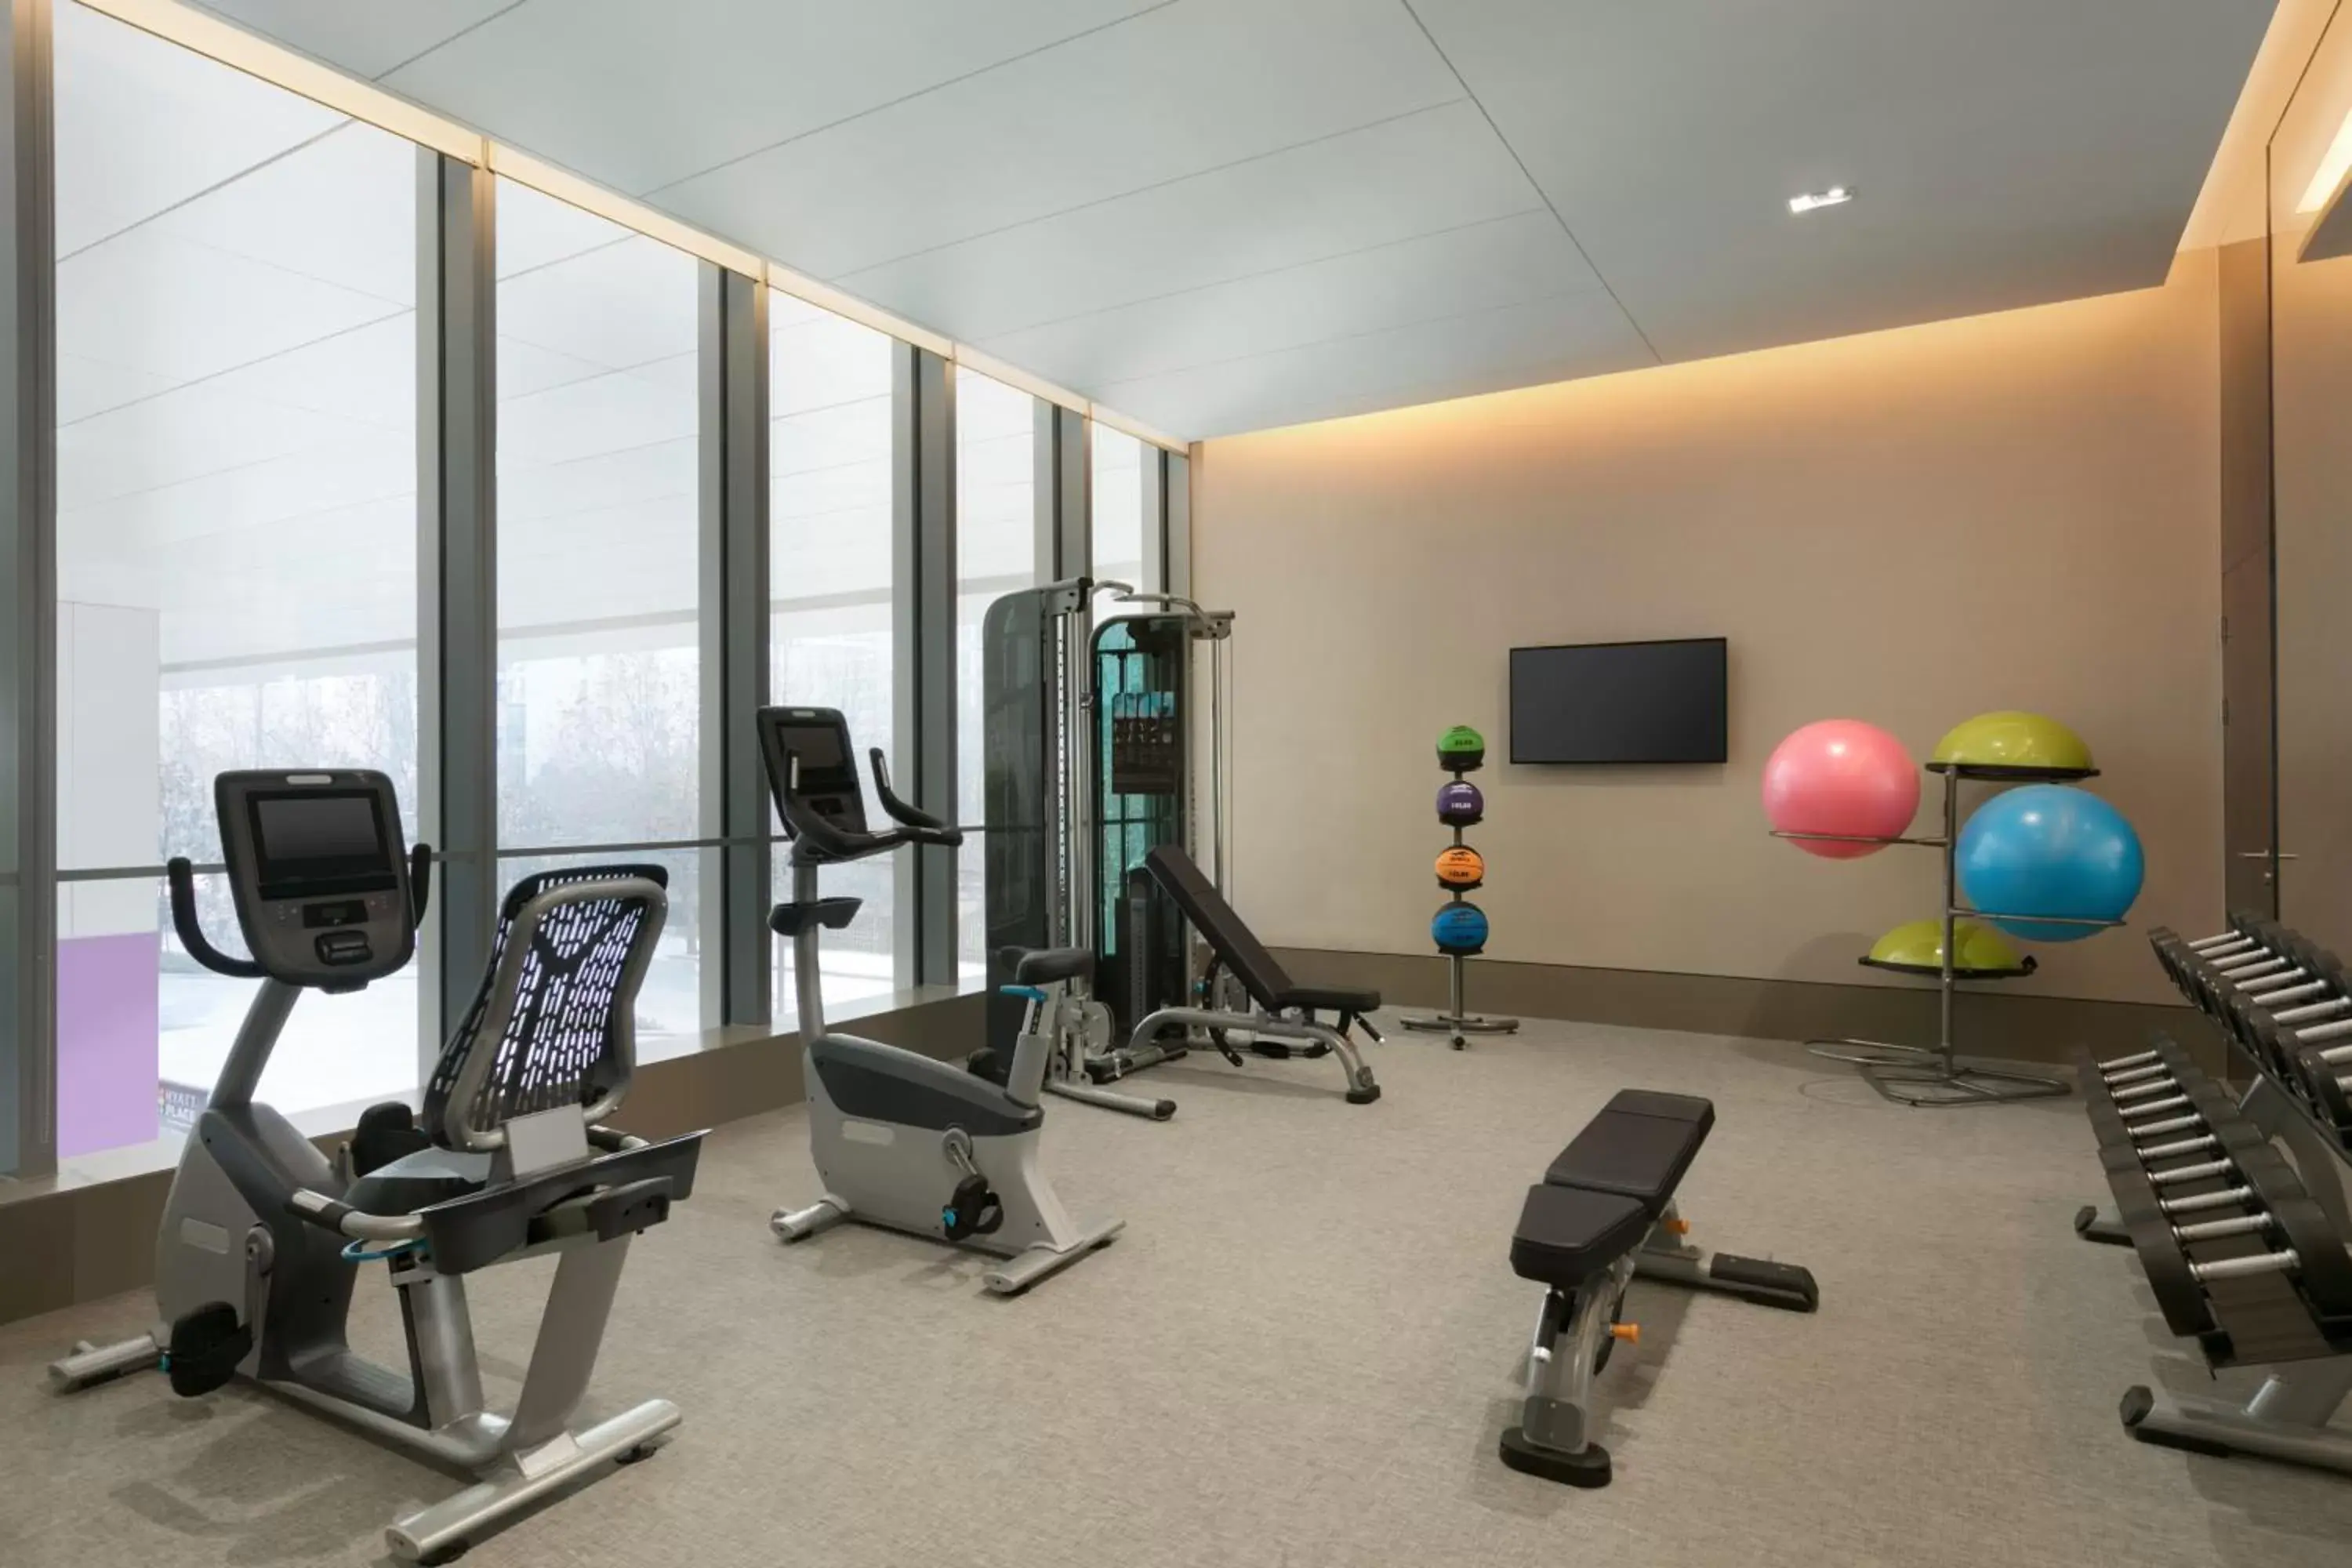 Fitness centre/facilities, Fitness Center/Facilities in Hyatt Place Shanghai Tianshan Plaza